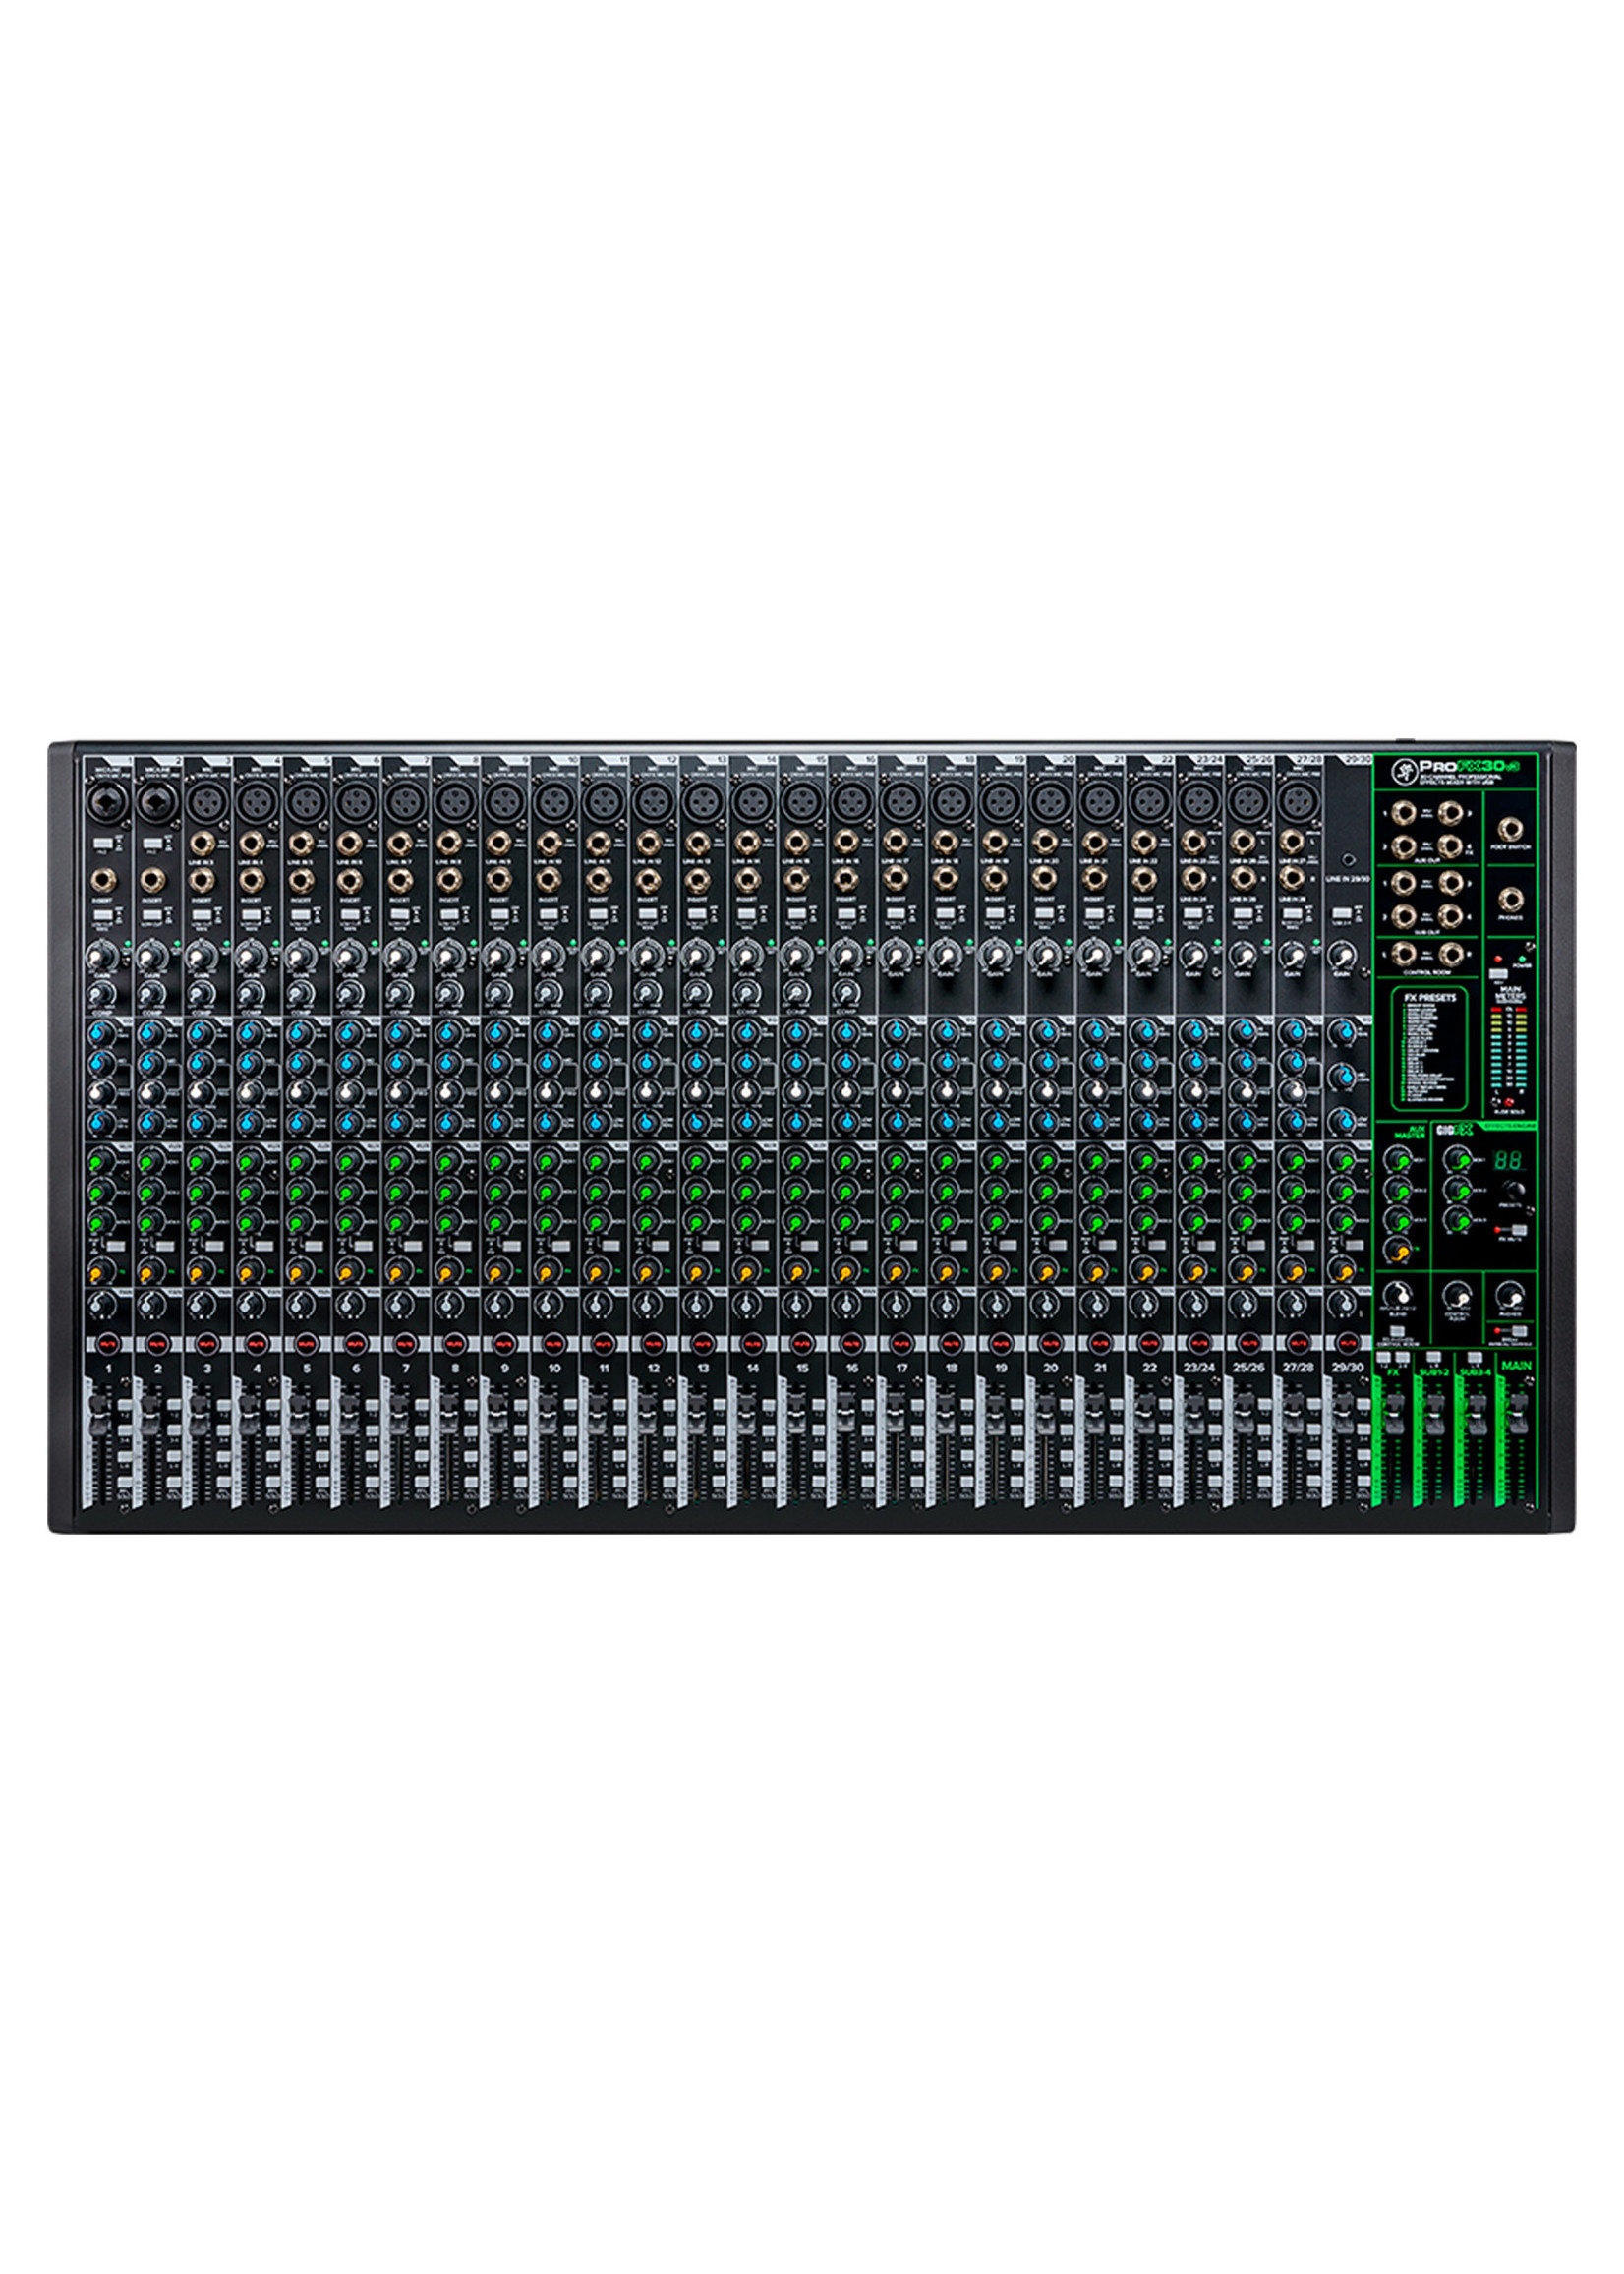 Mackie Mackie ProFX30v3, 30-channel Professional USB Mixer